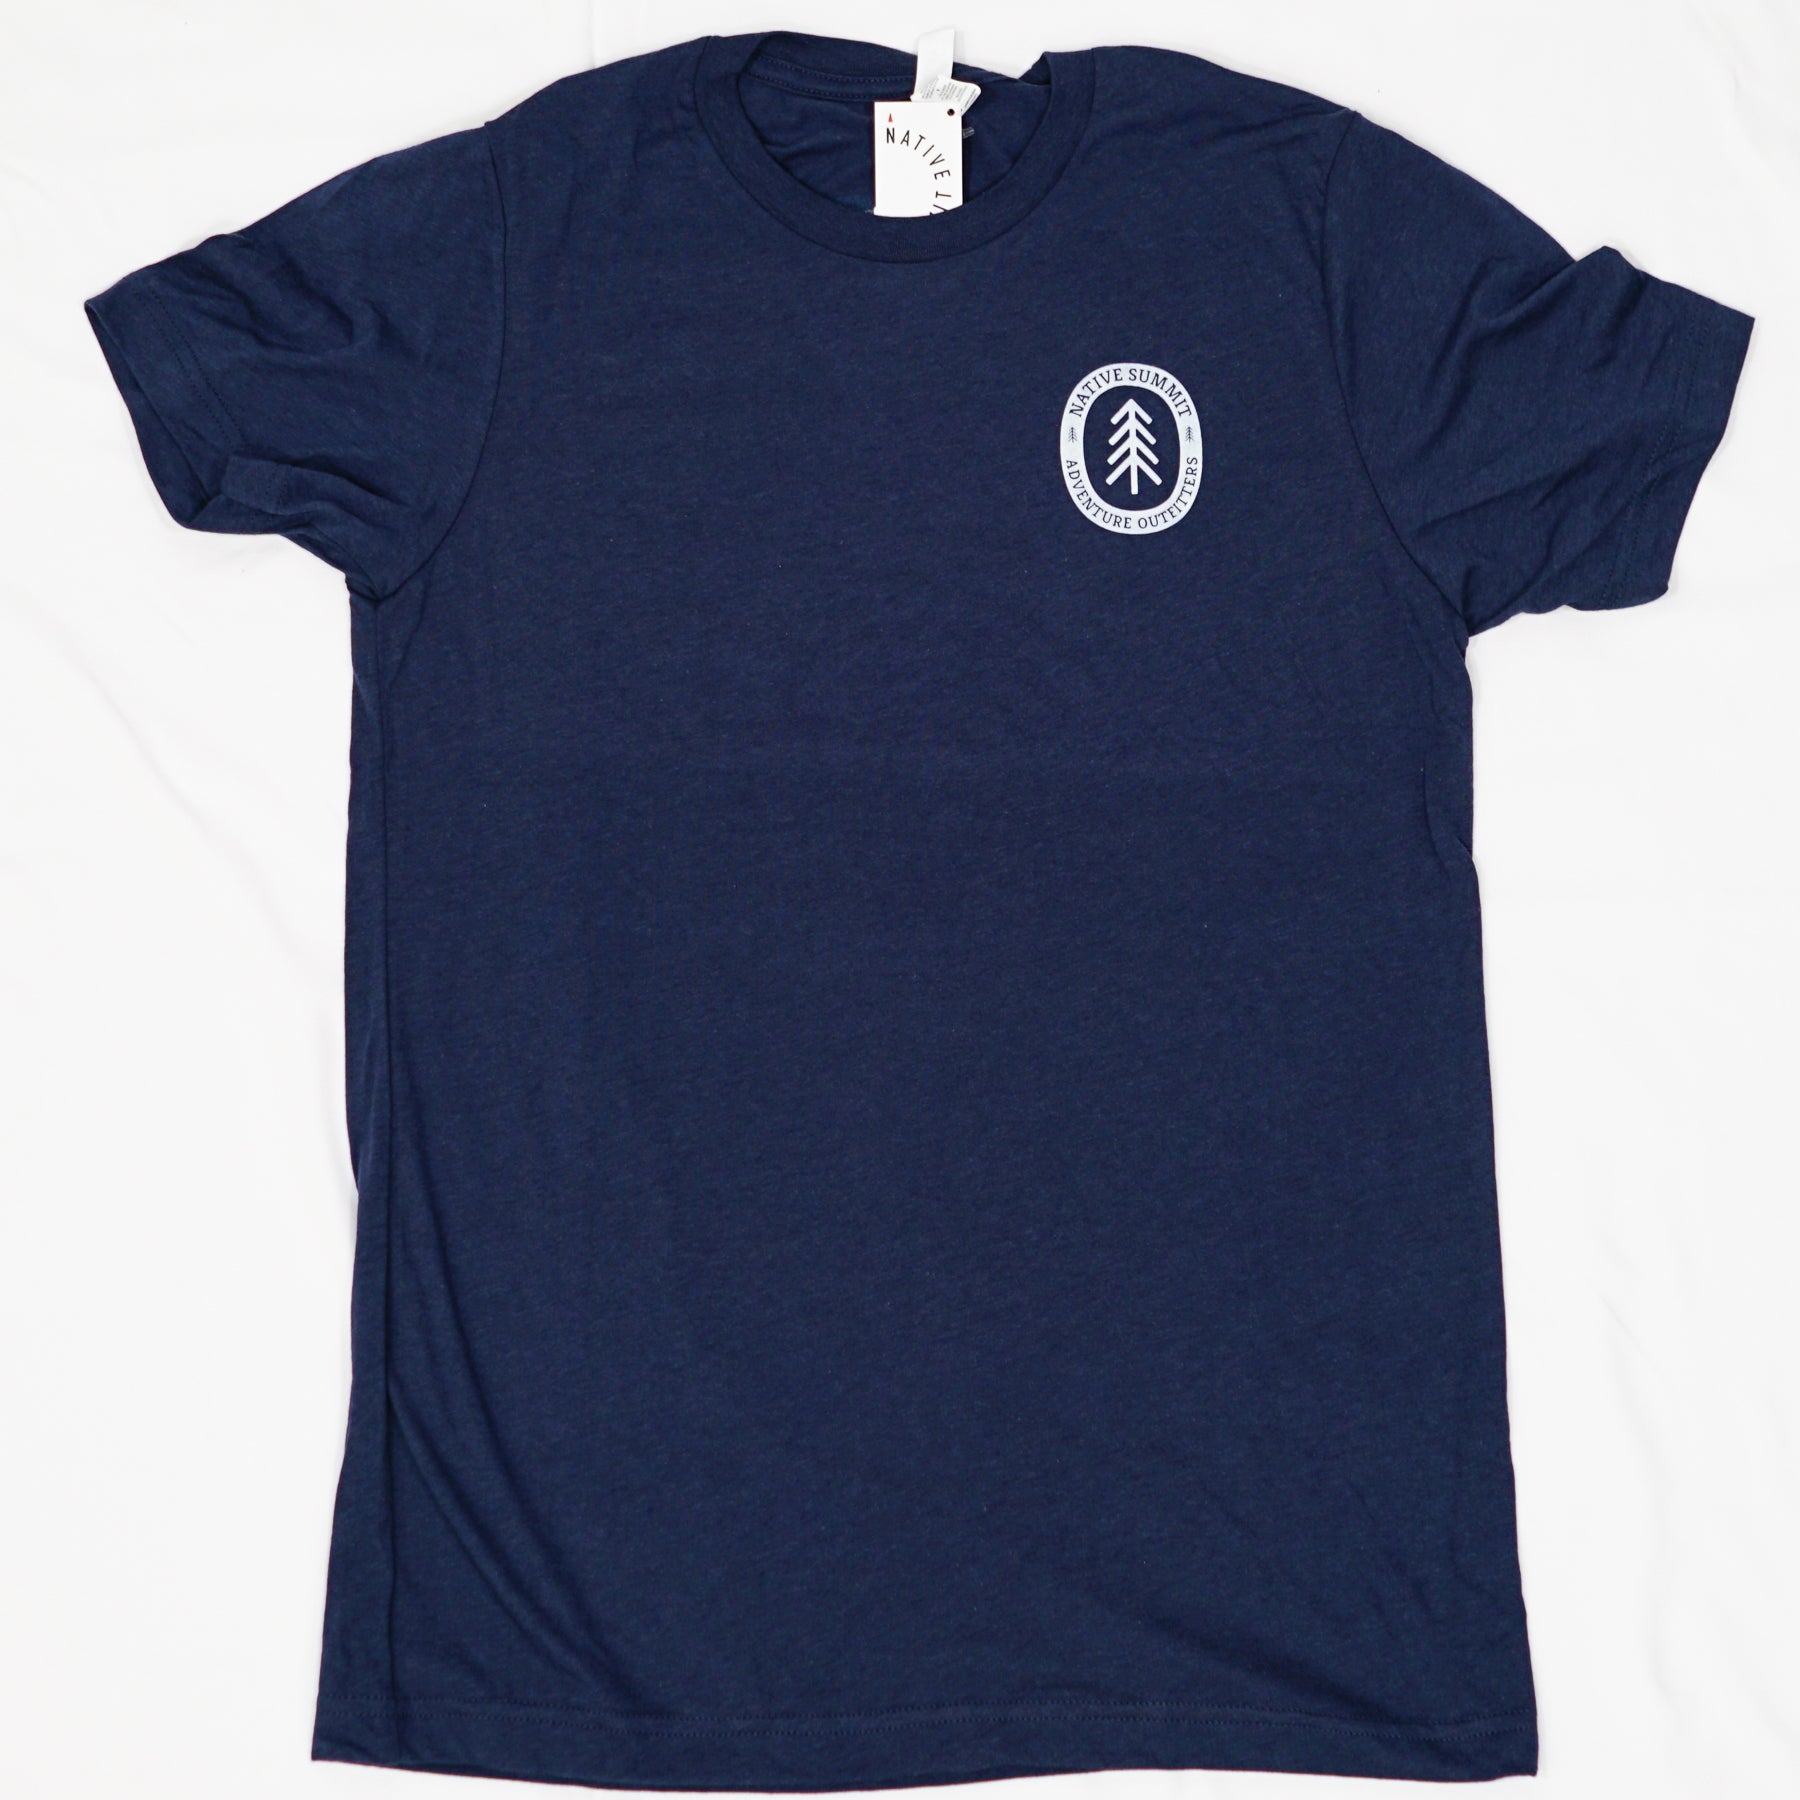 NS Oval Tree SS T-Shirt